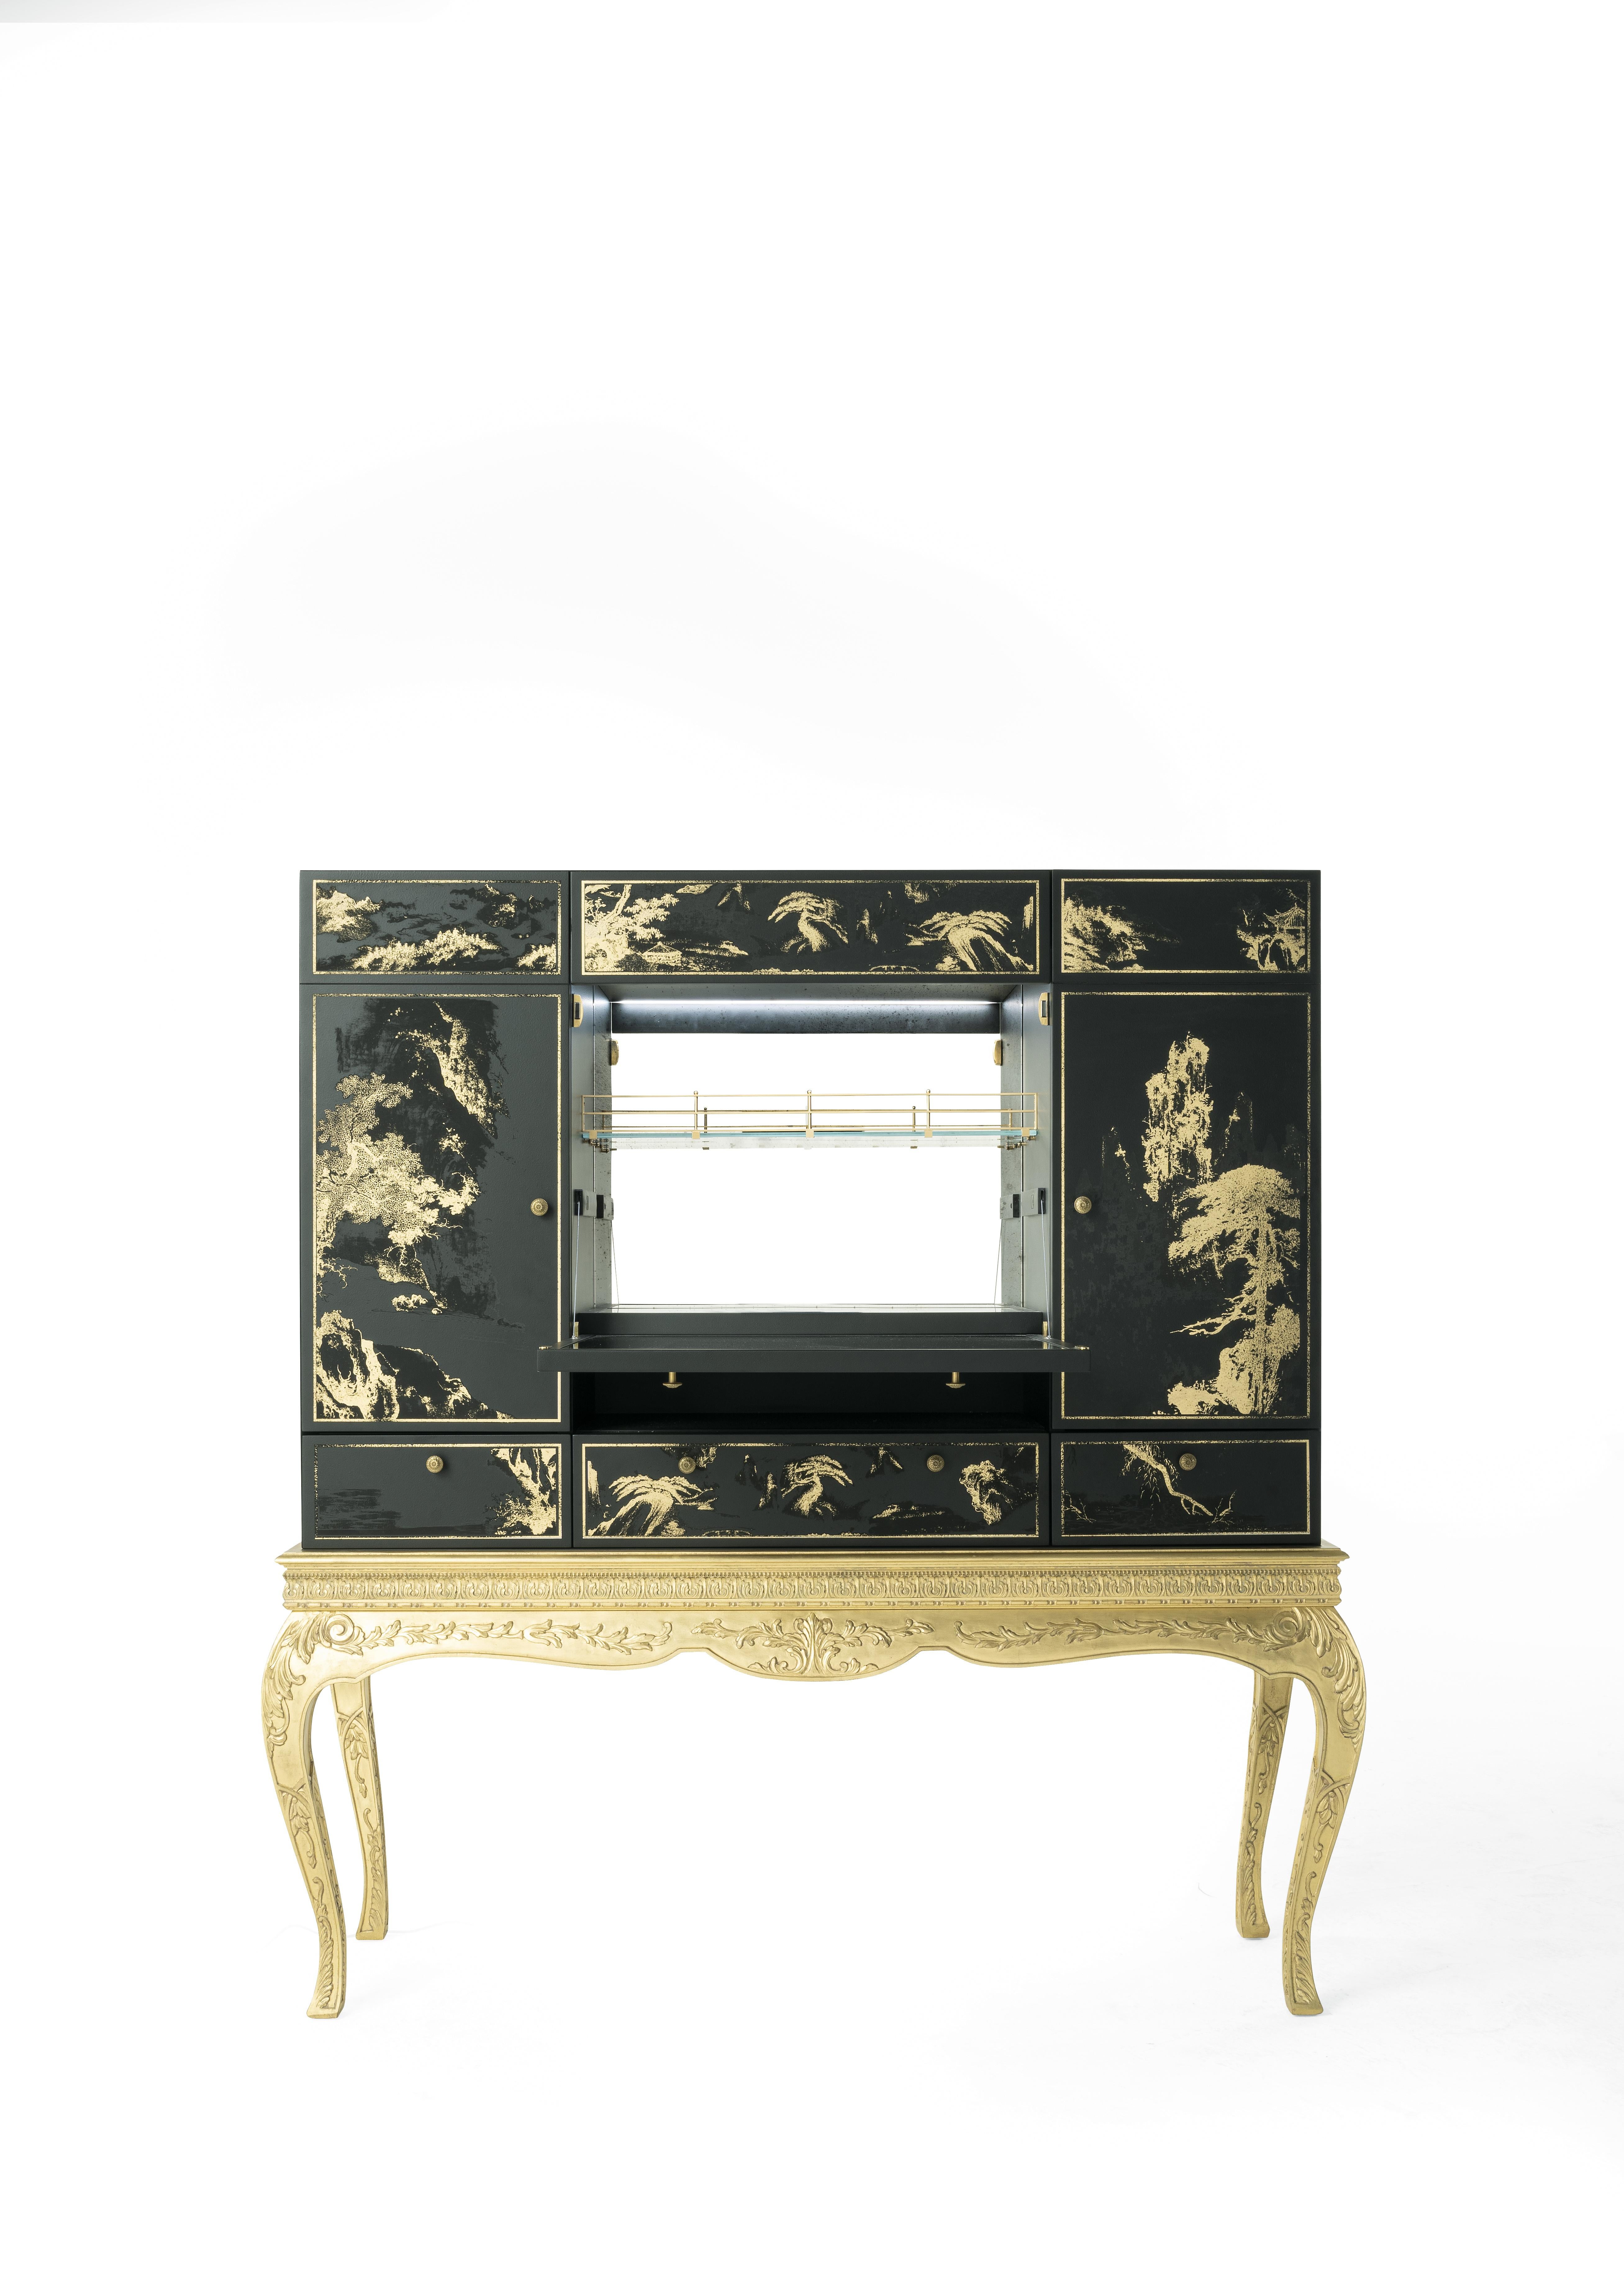 Wood 21st Century Brocart Bar Cabinet with Gold Leaf Laser Engraved Lace Decoration For Sale